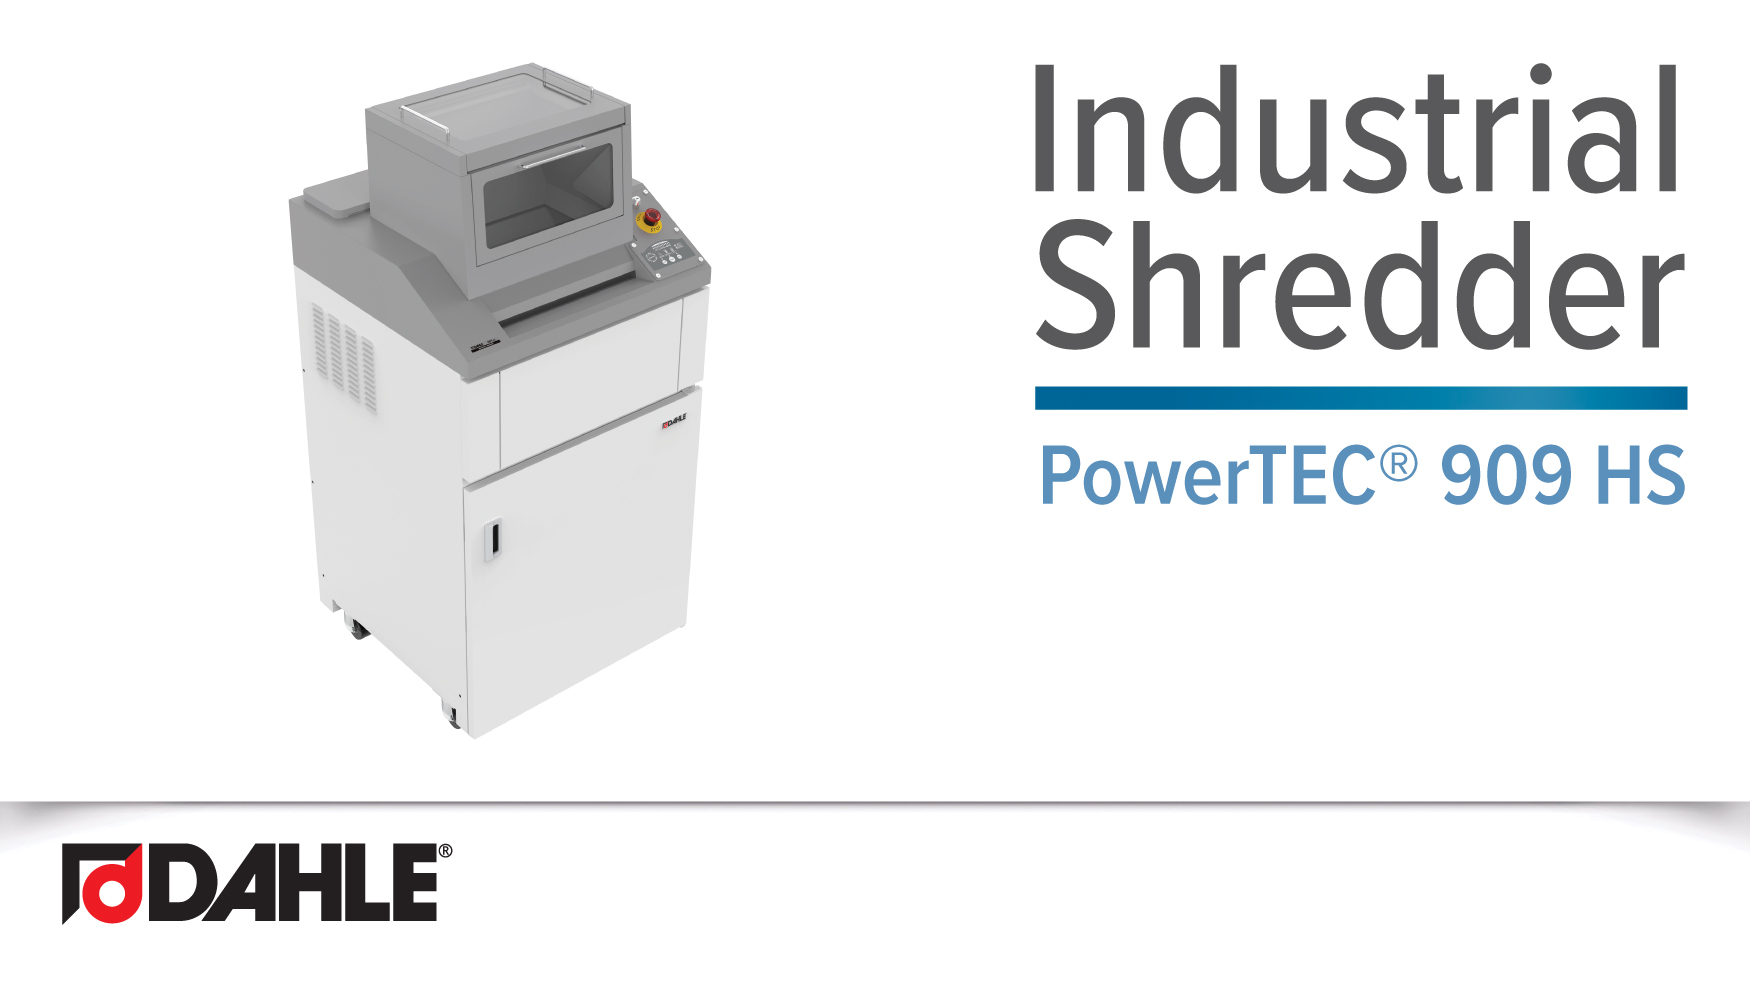 <big><strong>PowerTEC® 909 HS</strong></big> <br>Industrial Shredder